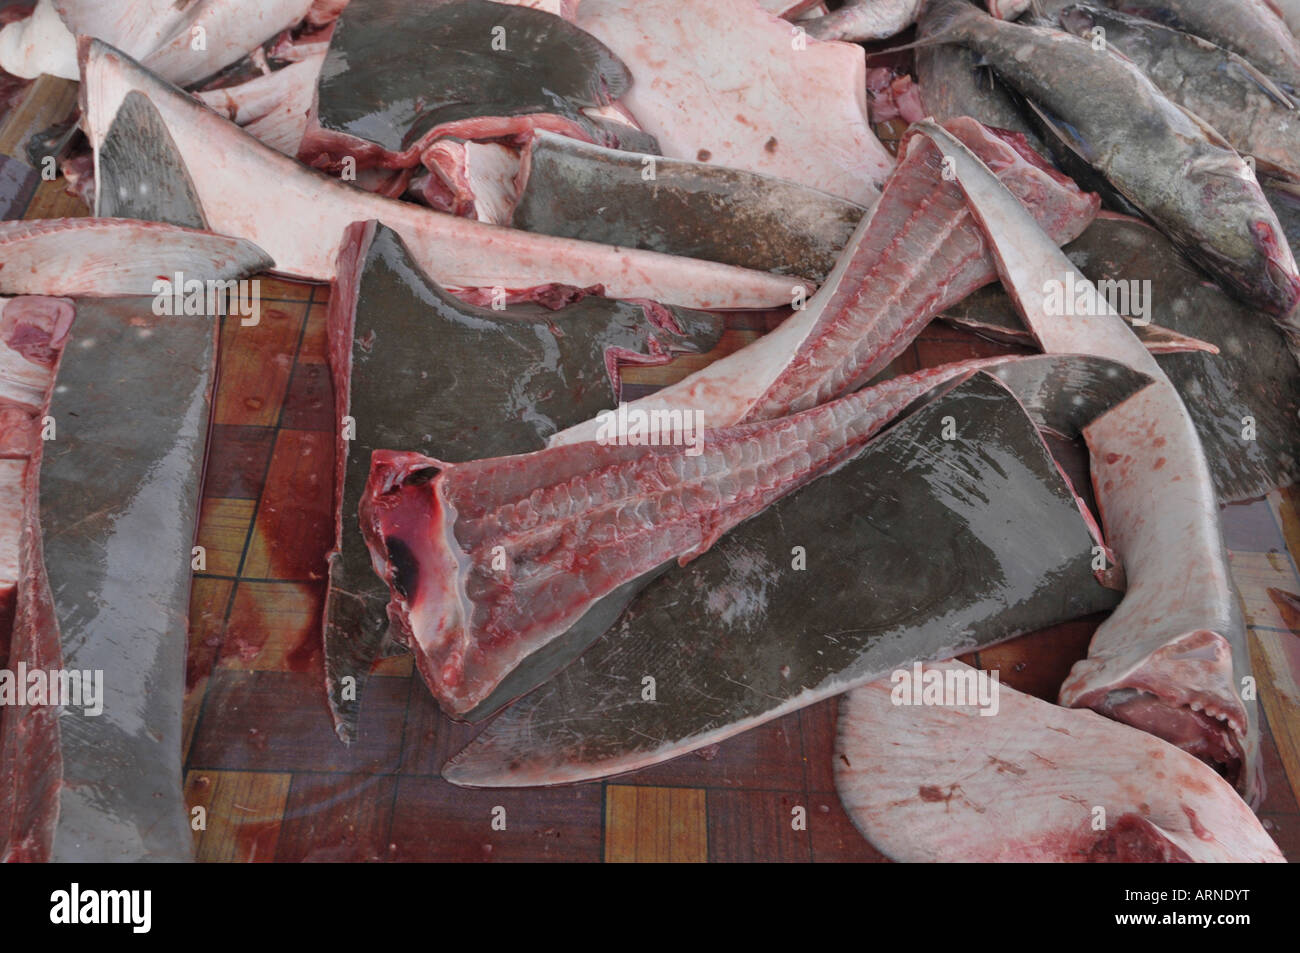 Fish or Wet Market in Kota Kinabulu capital of Sabah Northern Borneo Malaysia Sharks and fins Stock Photo